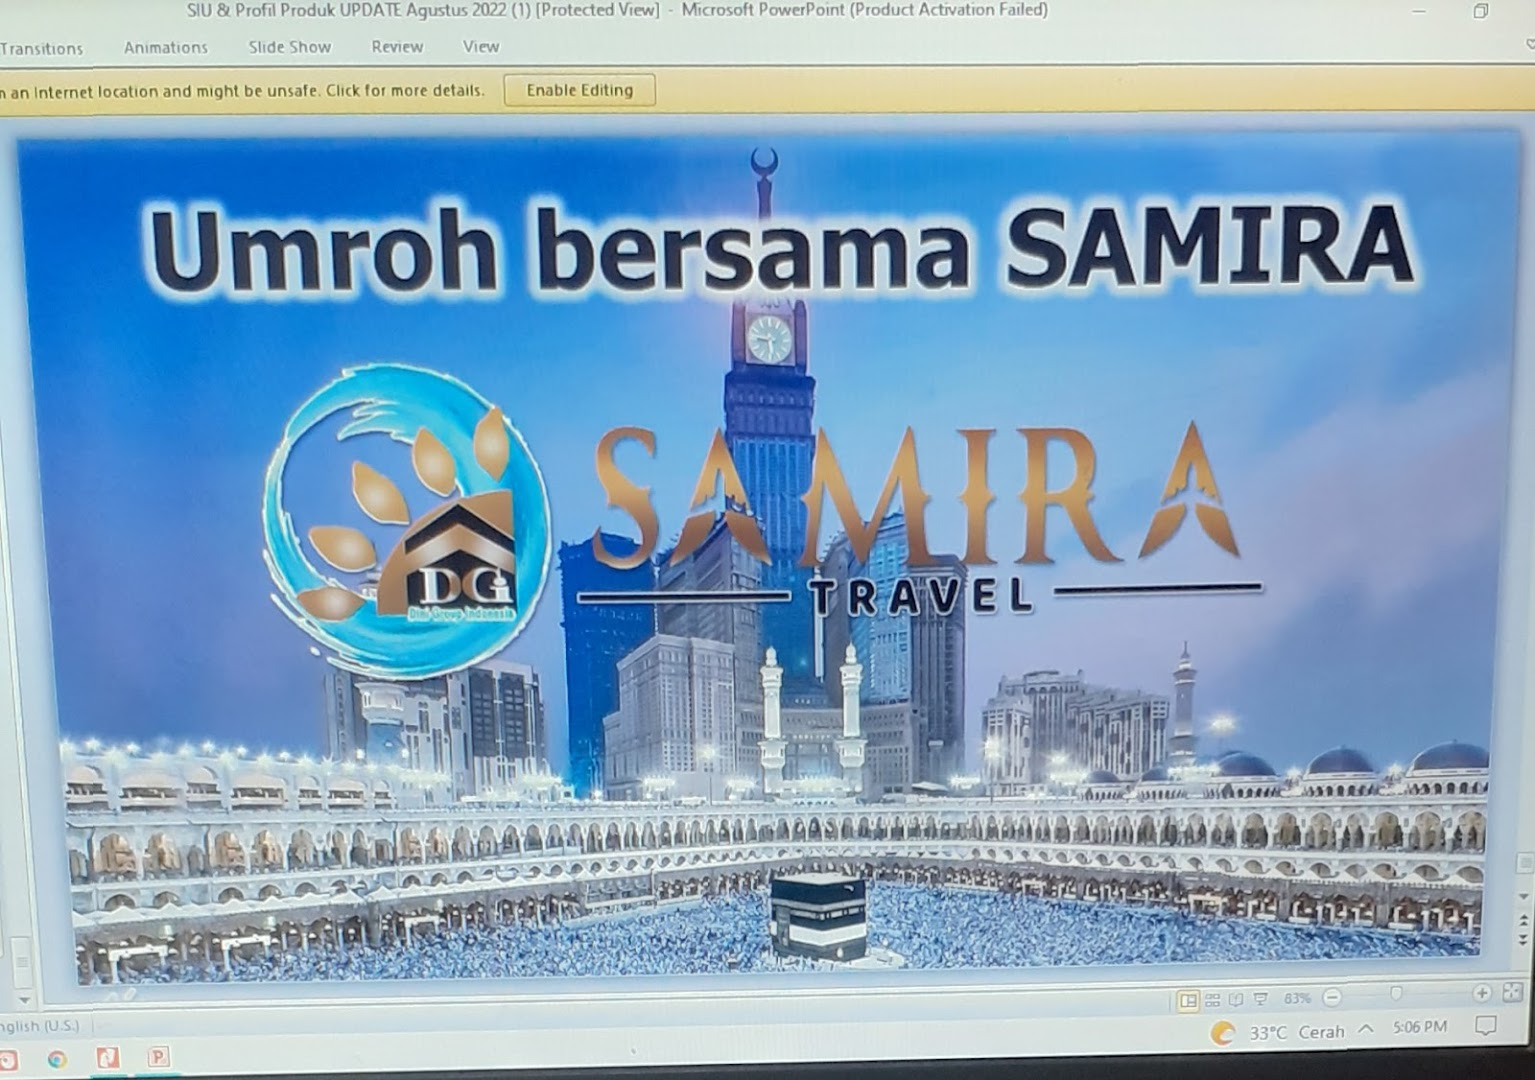 Samira Travel Photo